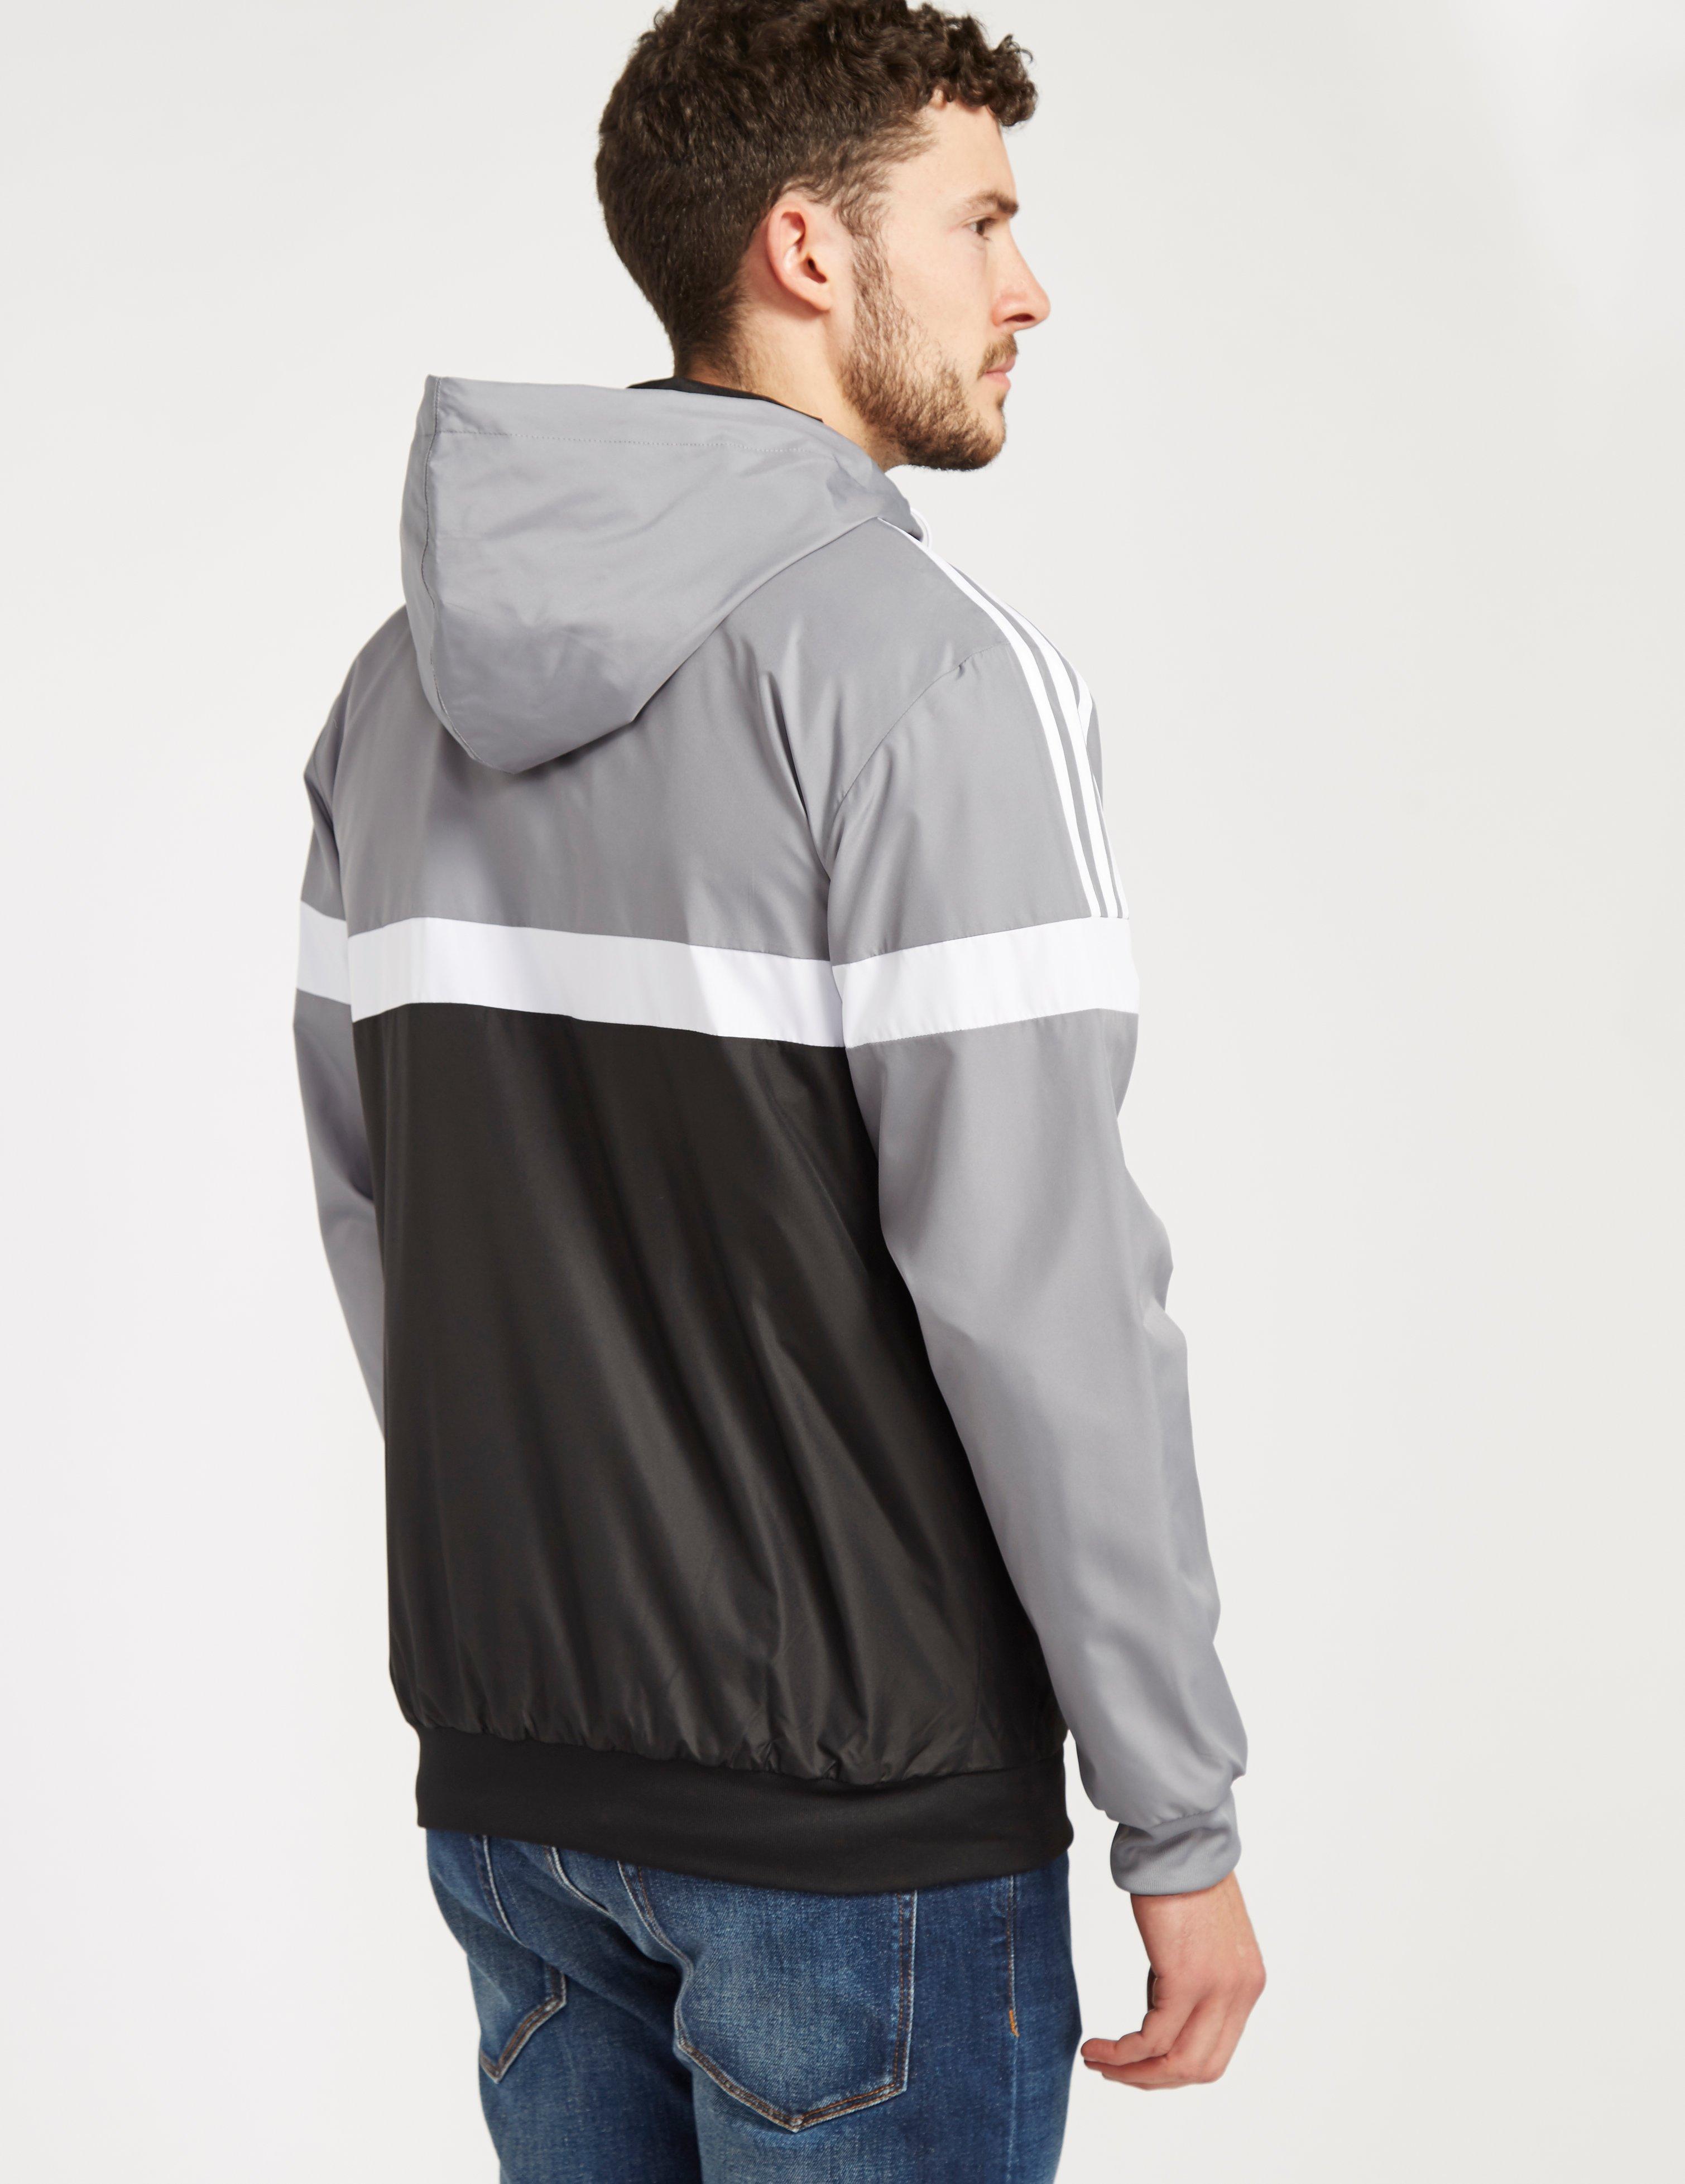 adidas Originals Itasca Jacket in Grey/Black (Gray) for Men | Lyst